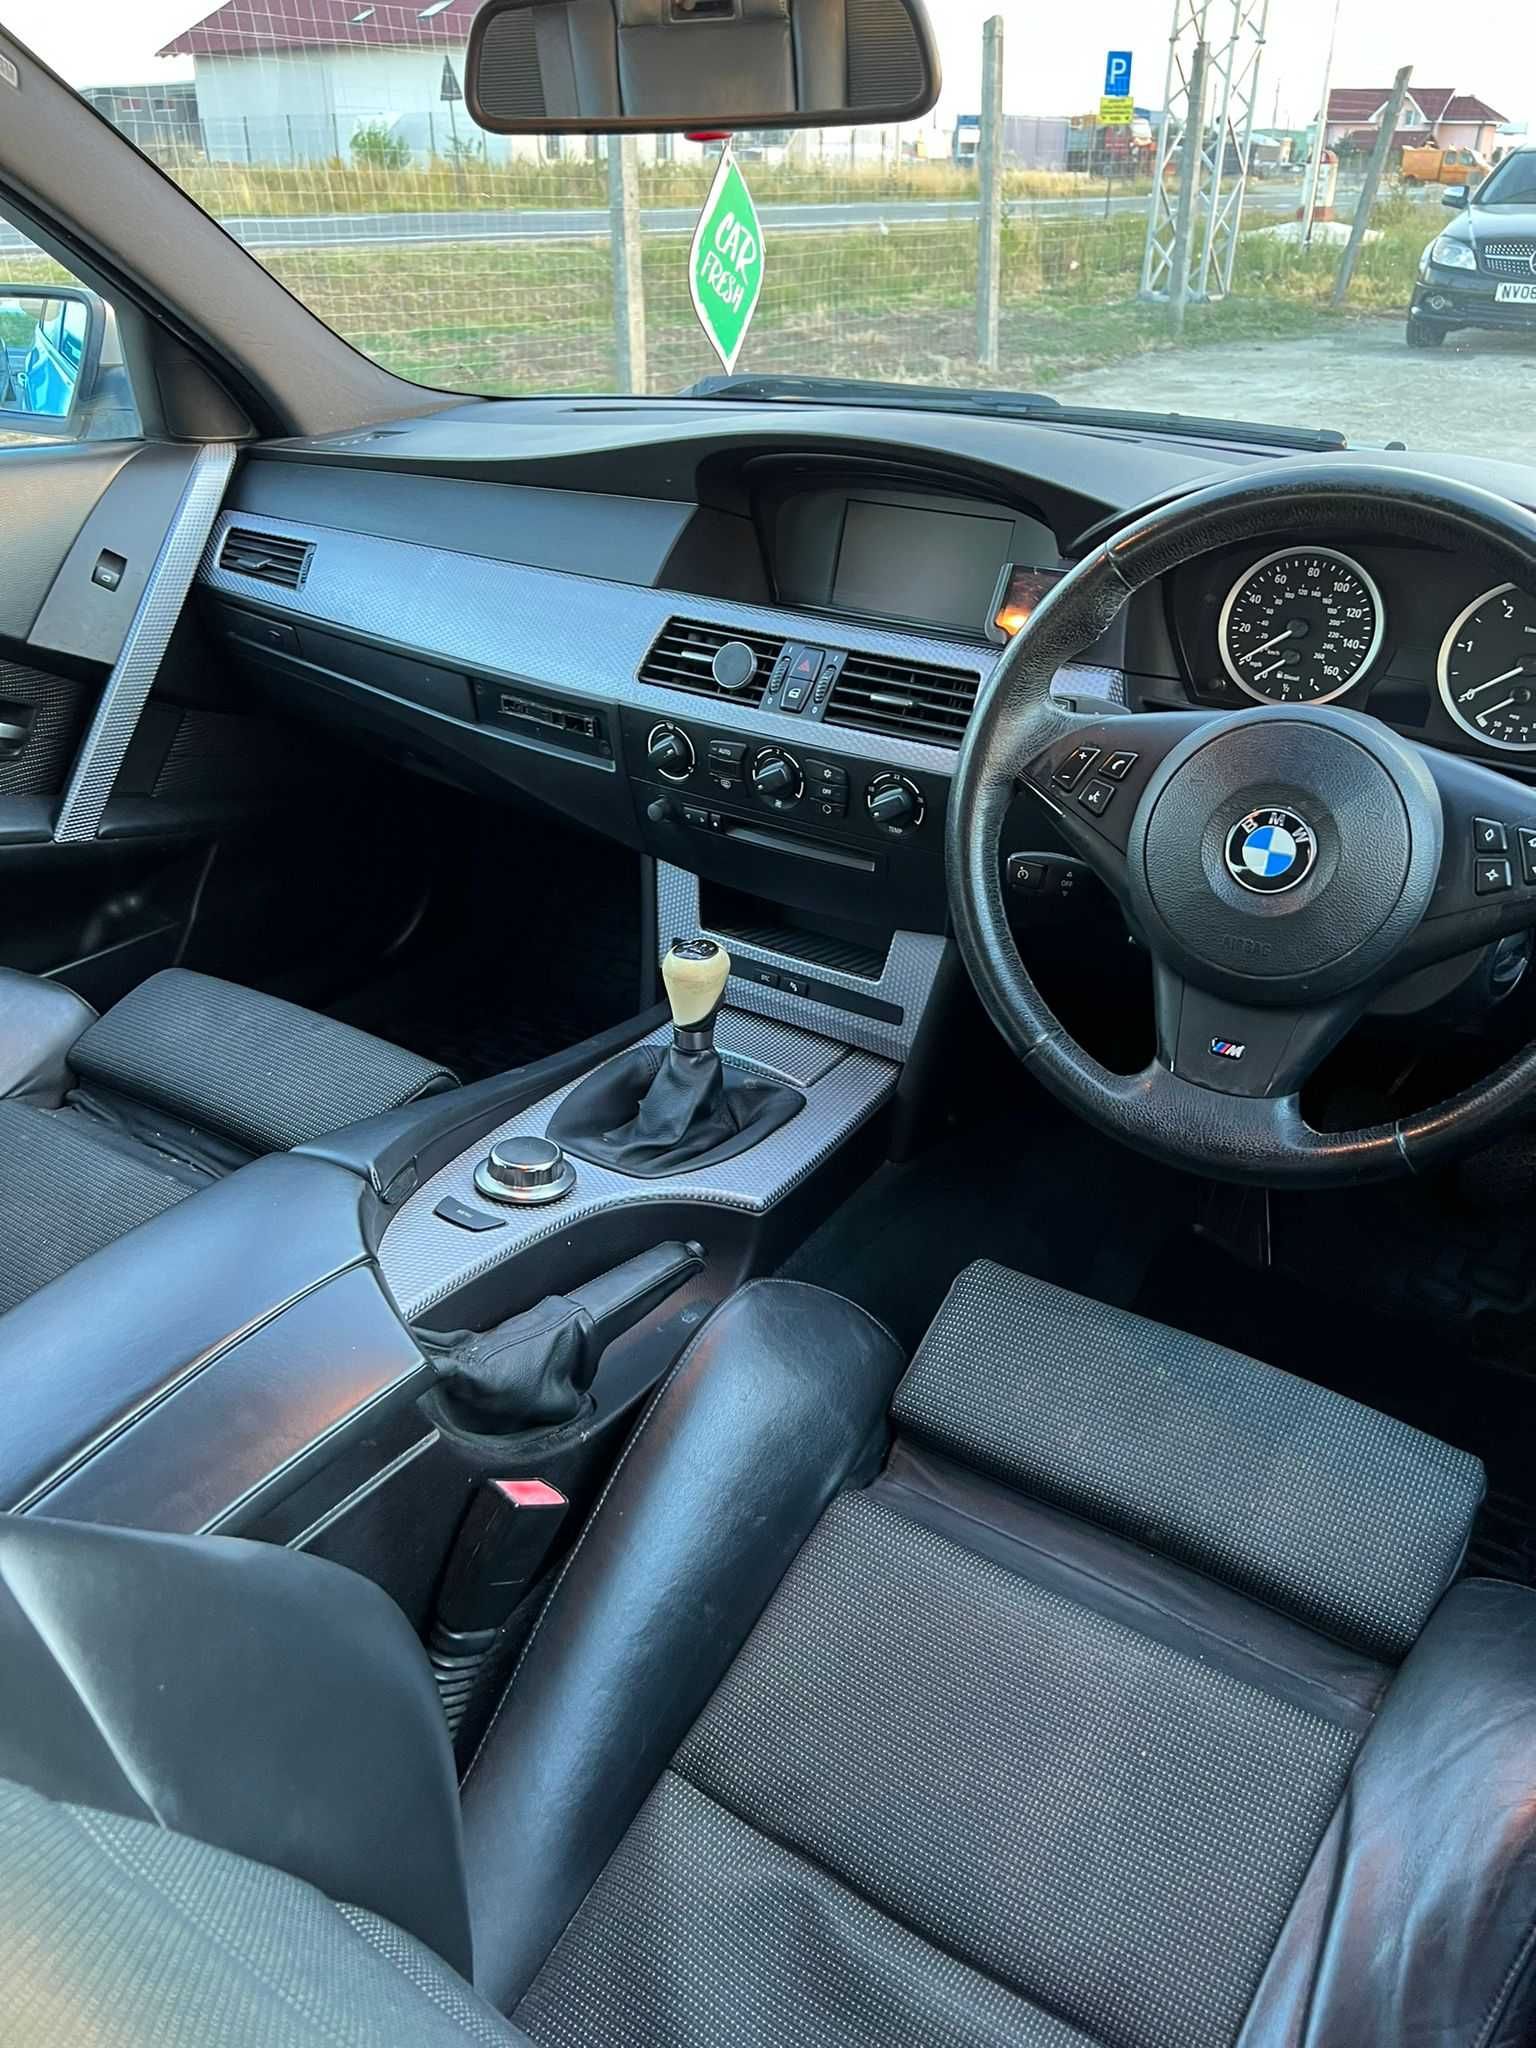 Dezmembram BMW E61, motor 2.0d, 163 cp, euro 4,